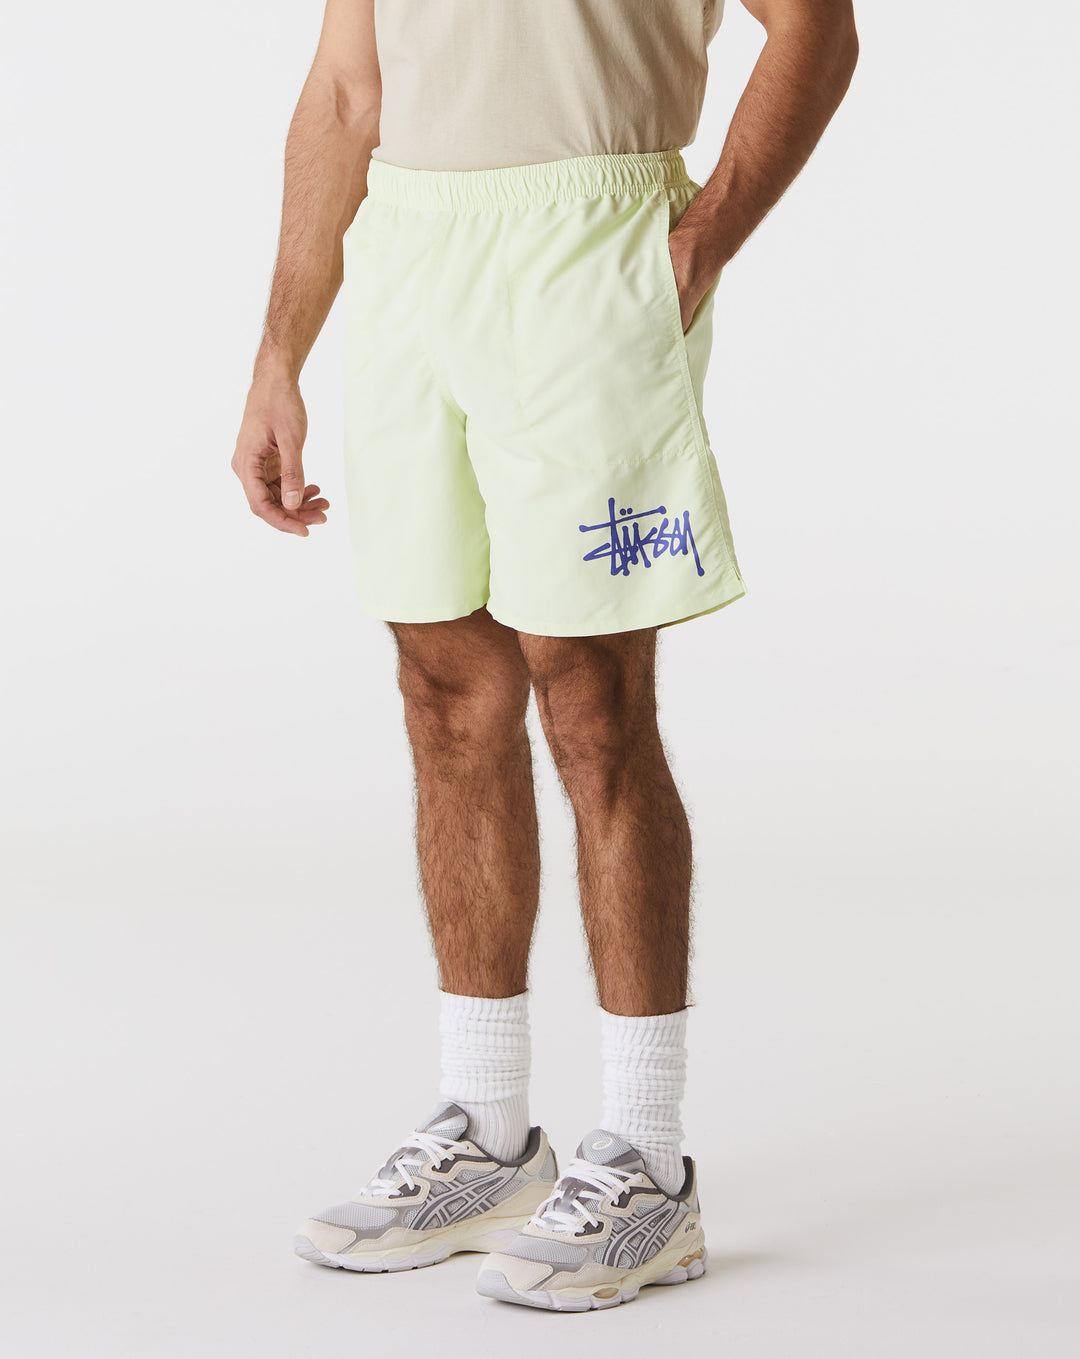 Stussy Boxer Briefs - Unisex Shorts & Trunks